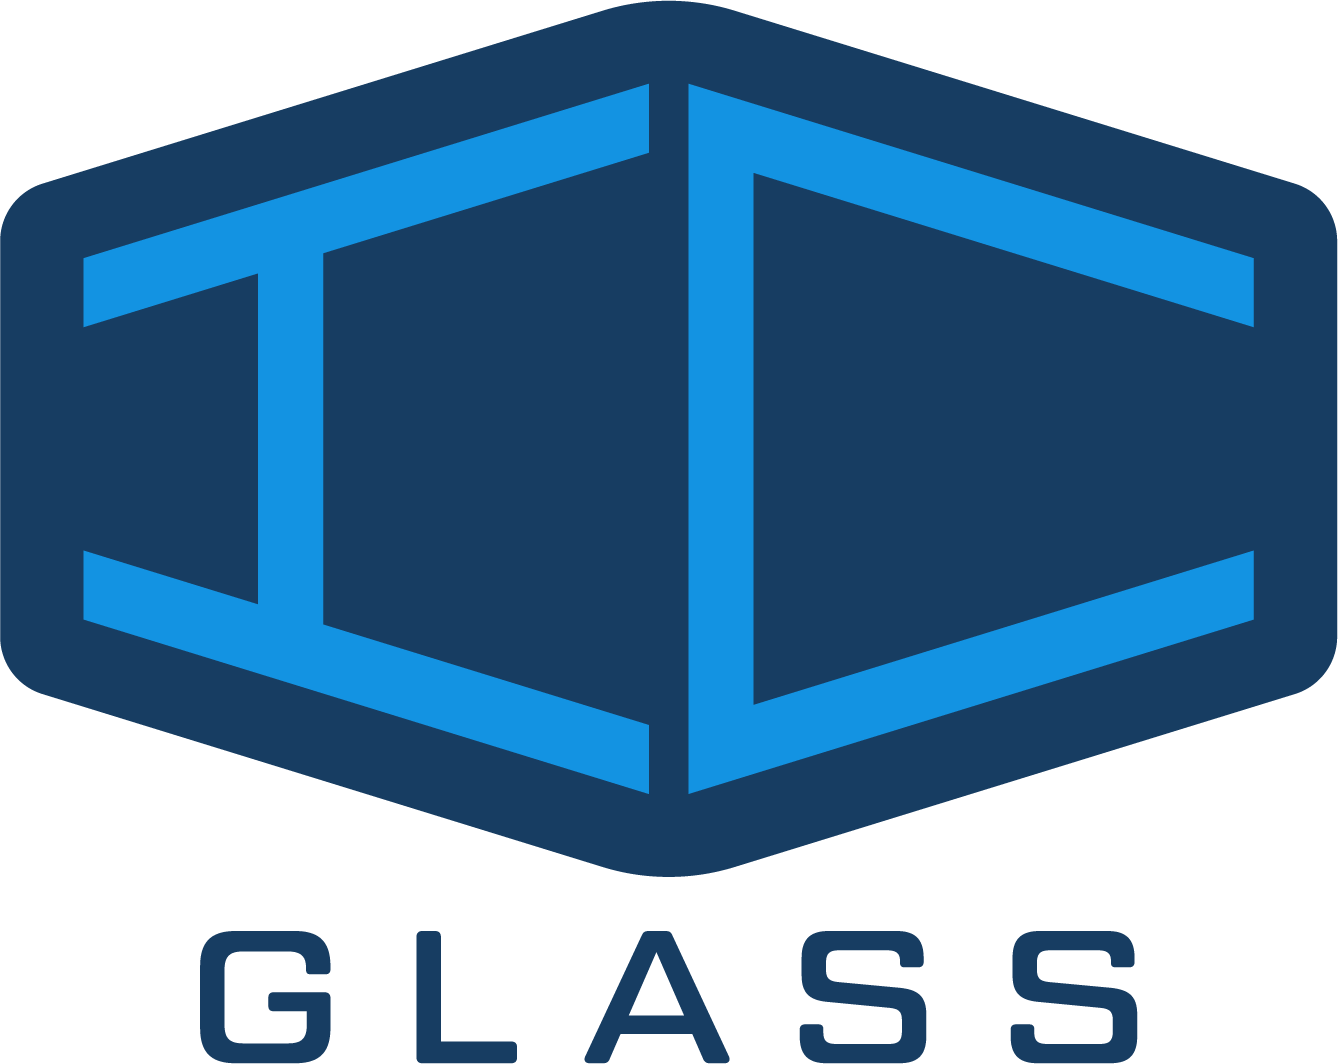 Geticglass